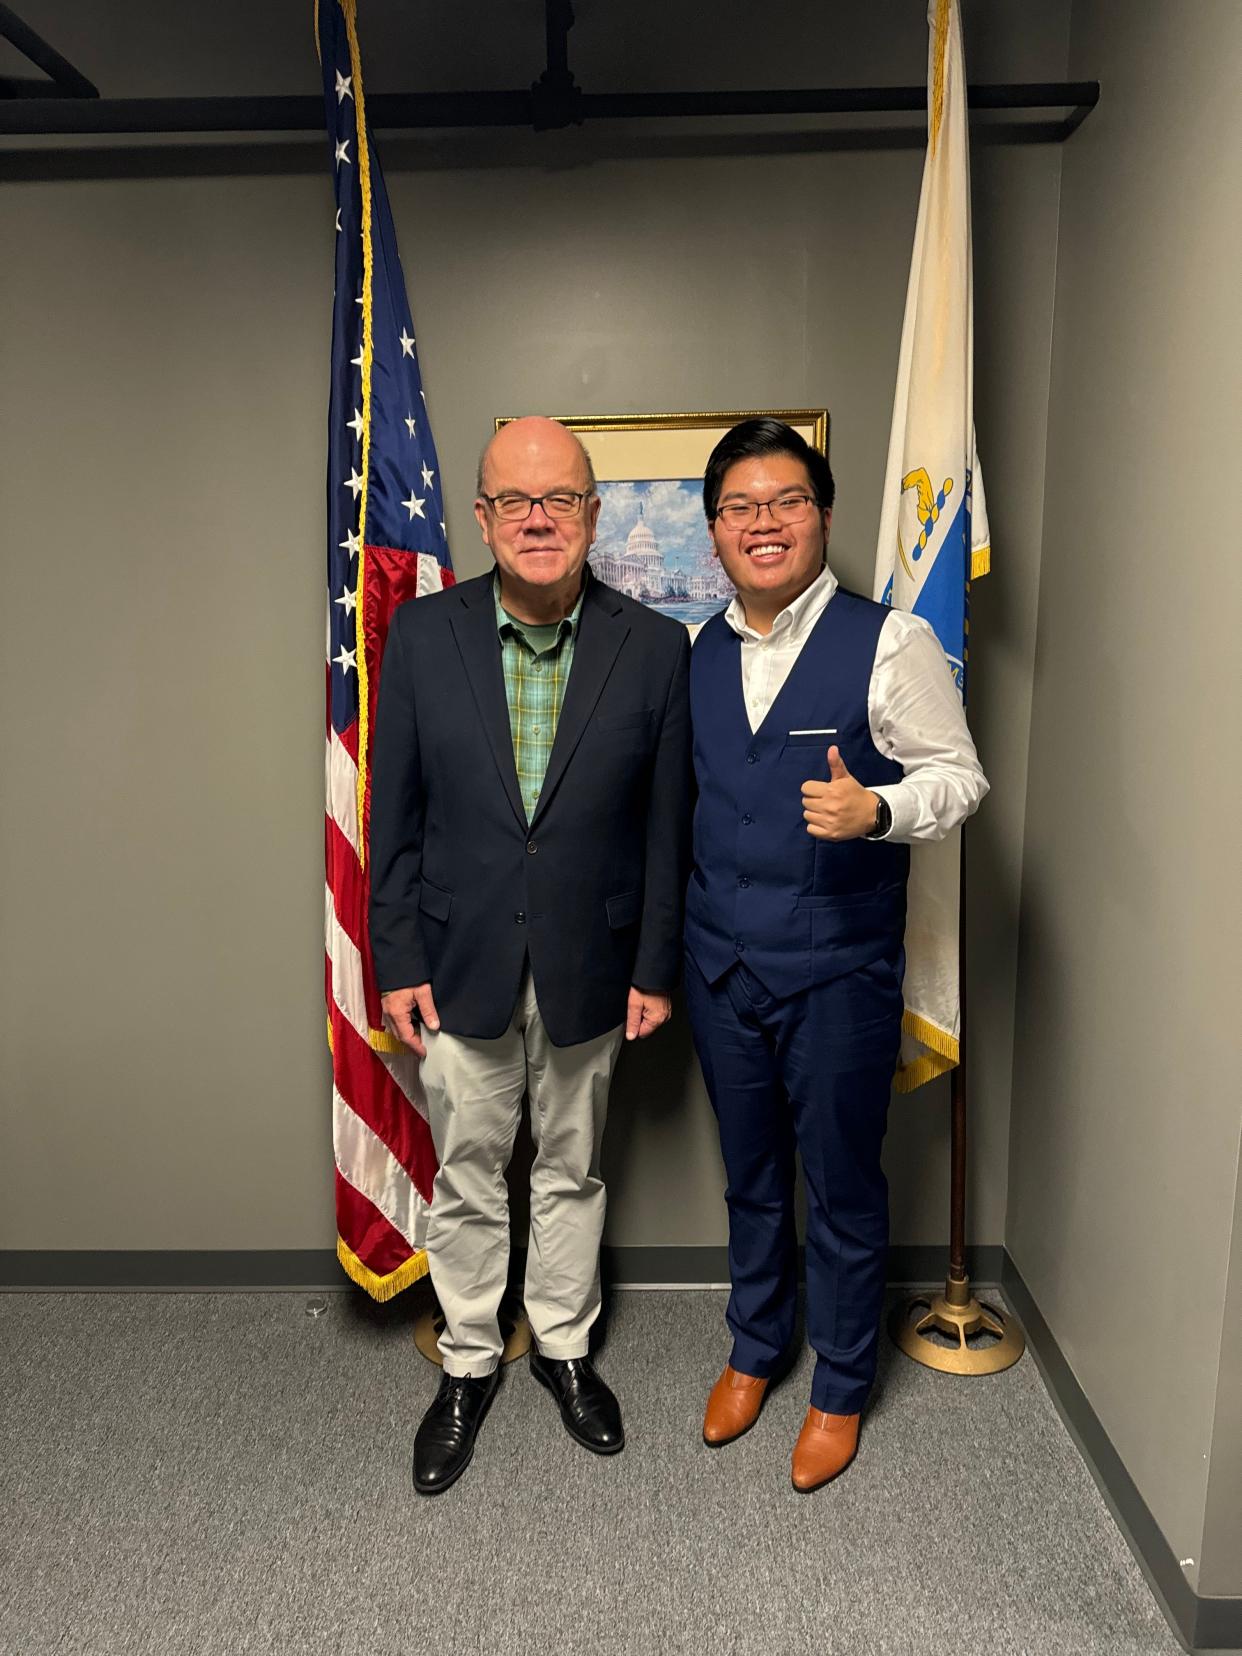 Shrewsbury High School student Trung Nguyen with U.S. Rep. Jim McGovern